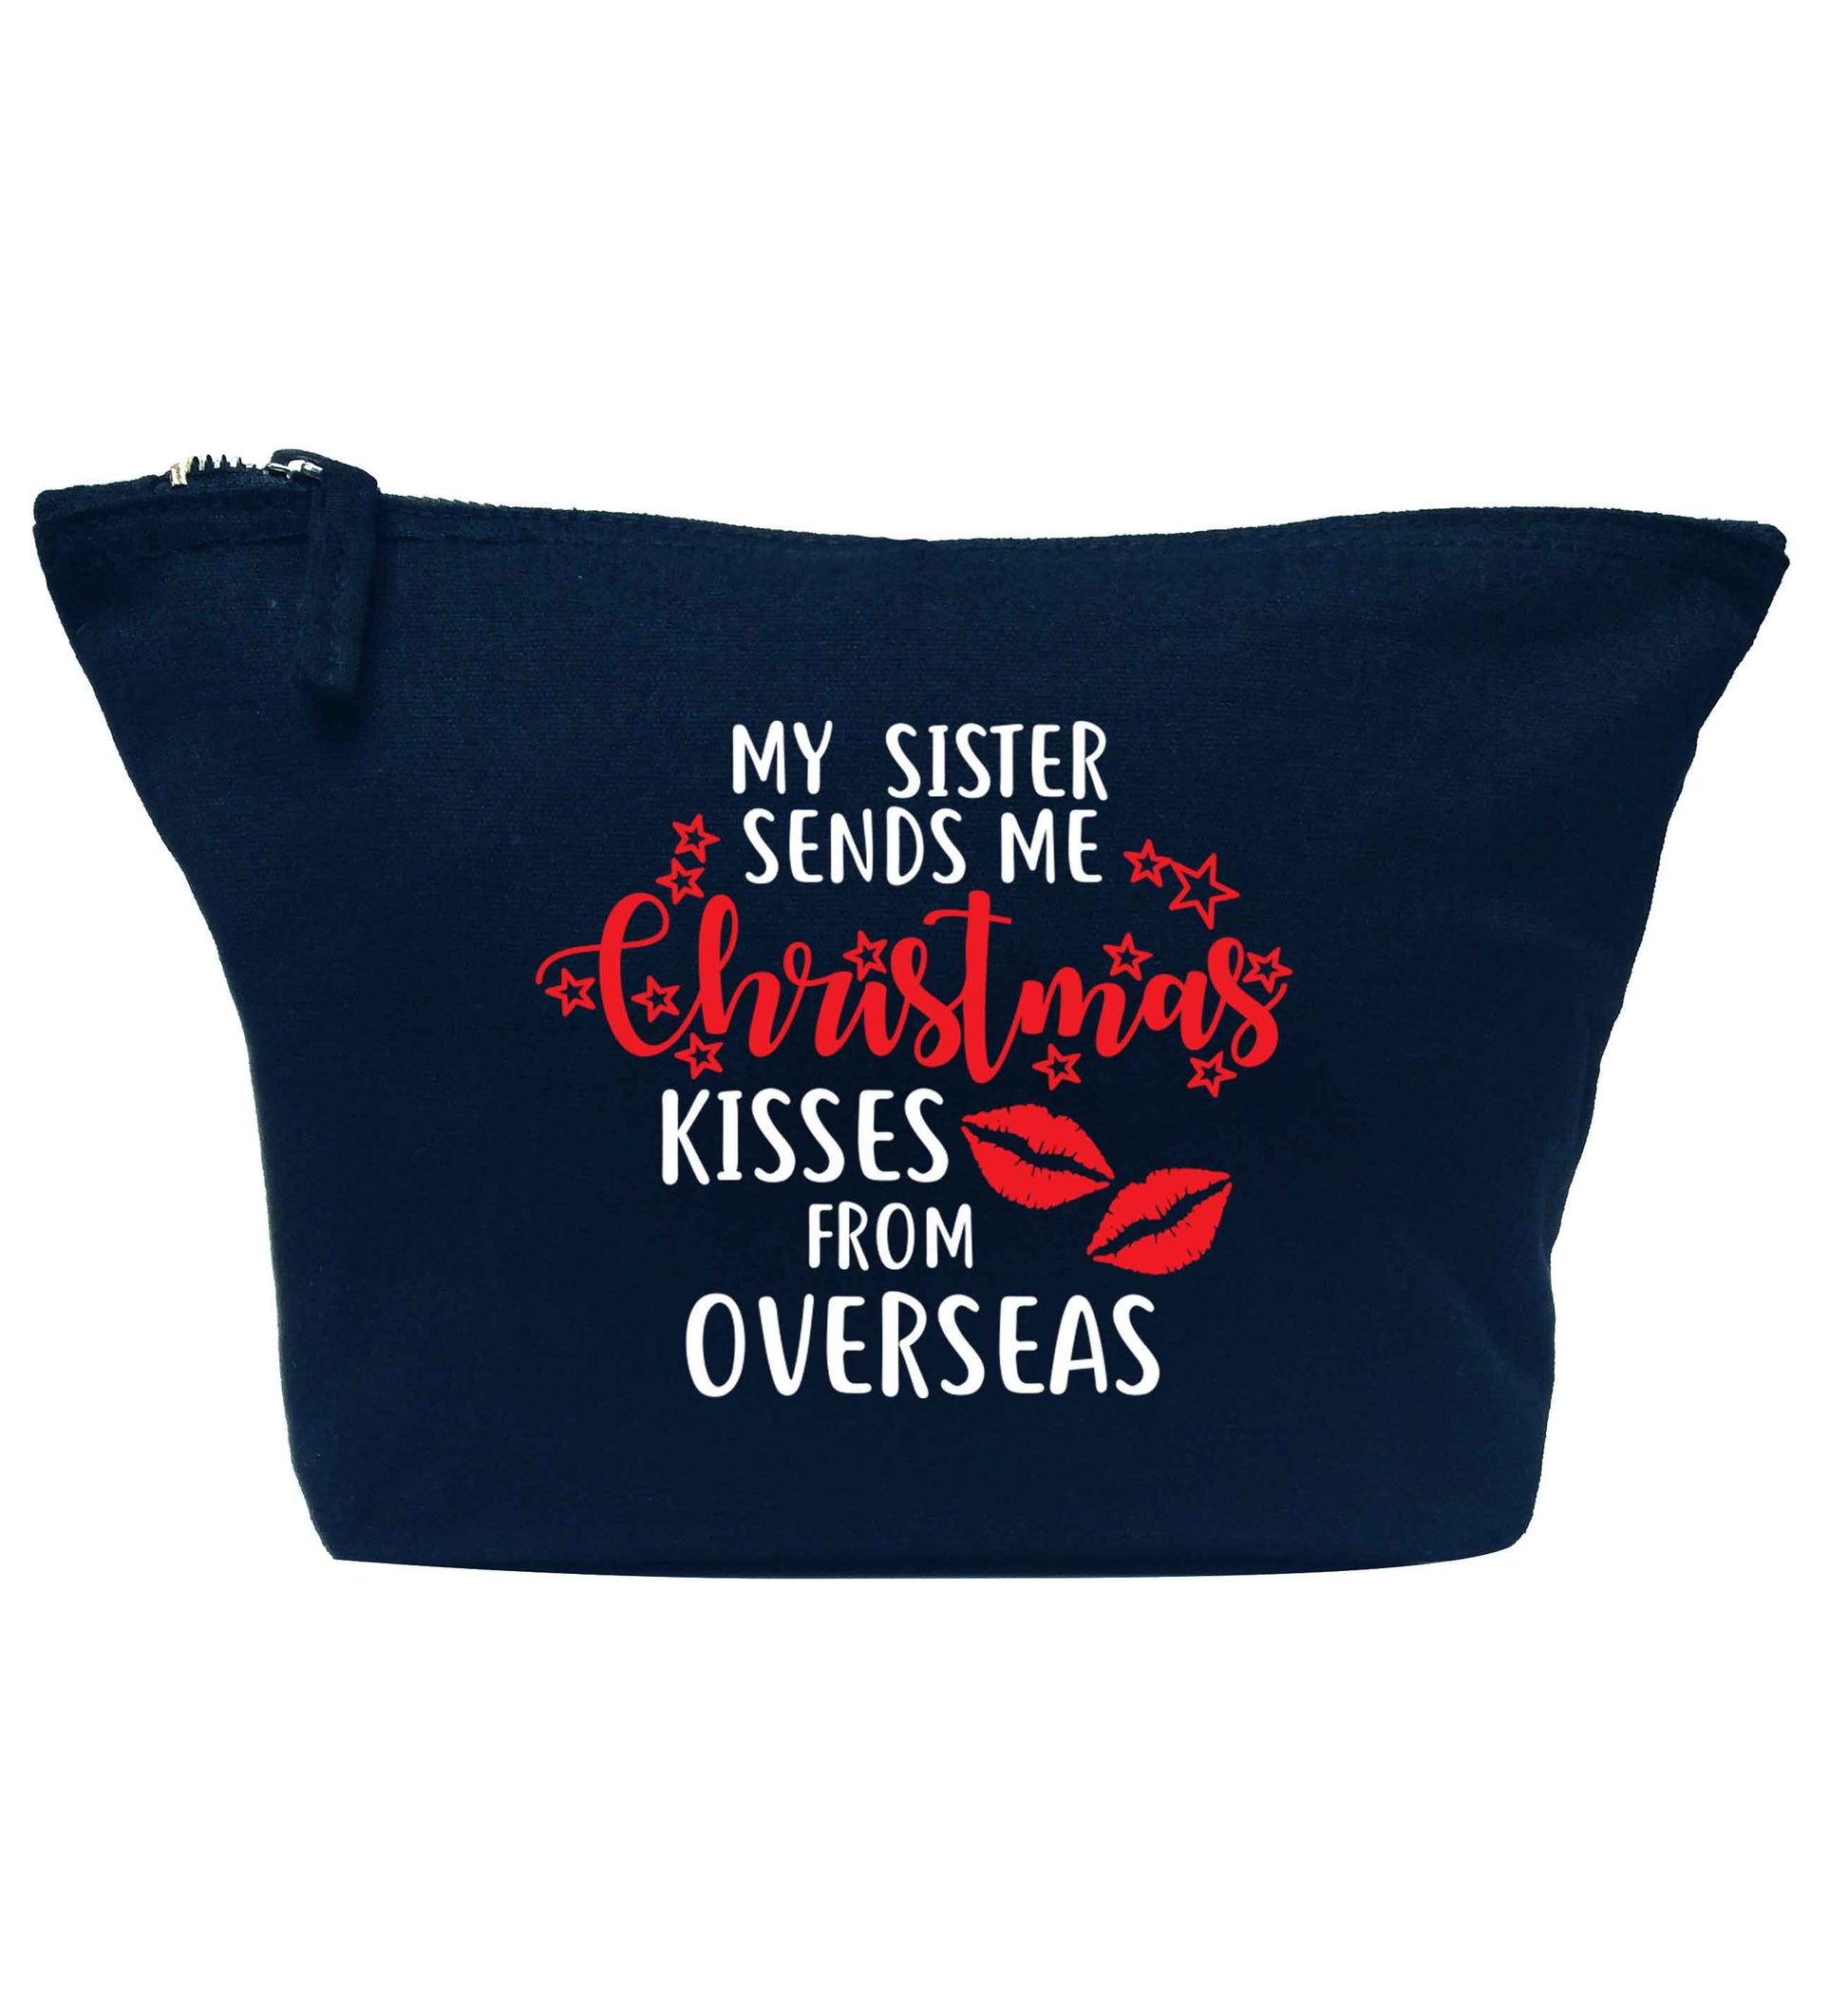 Grandad Christmas Kisses Overseas navy makeup bag